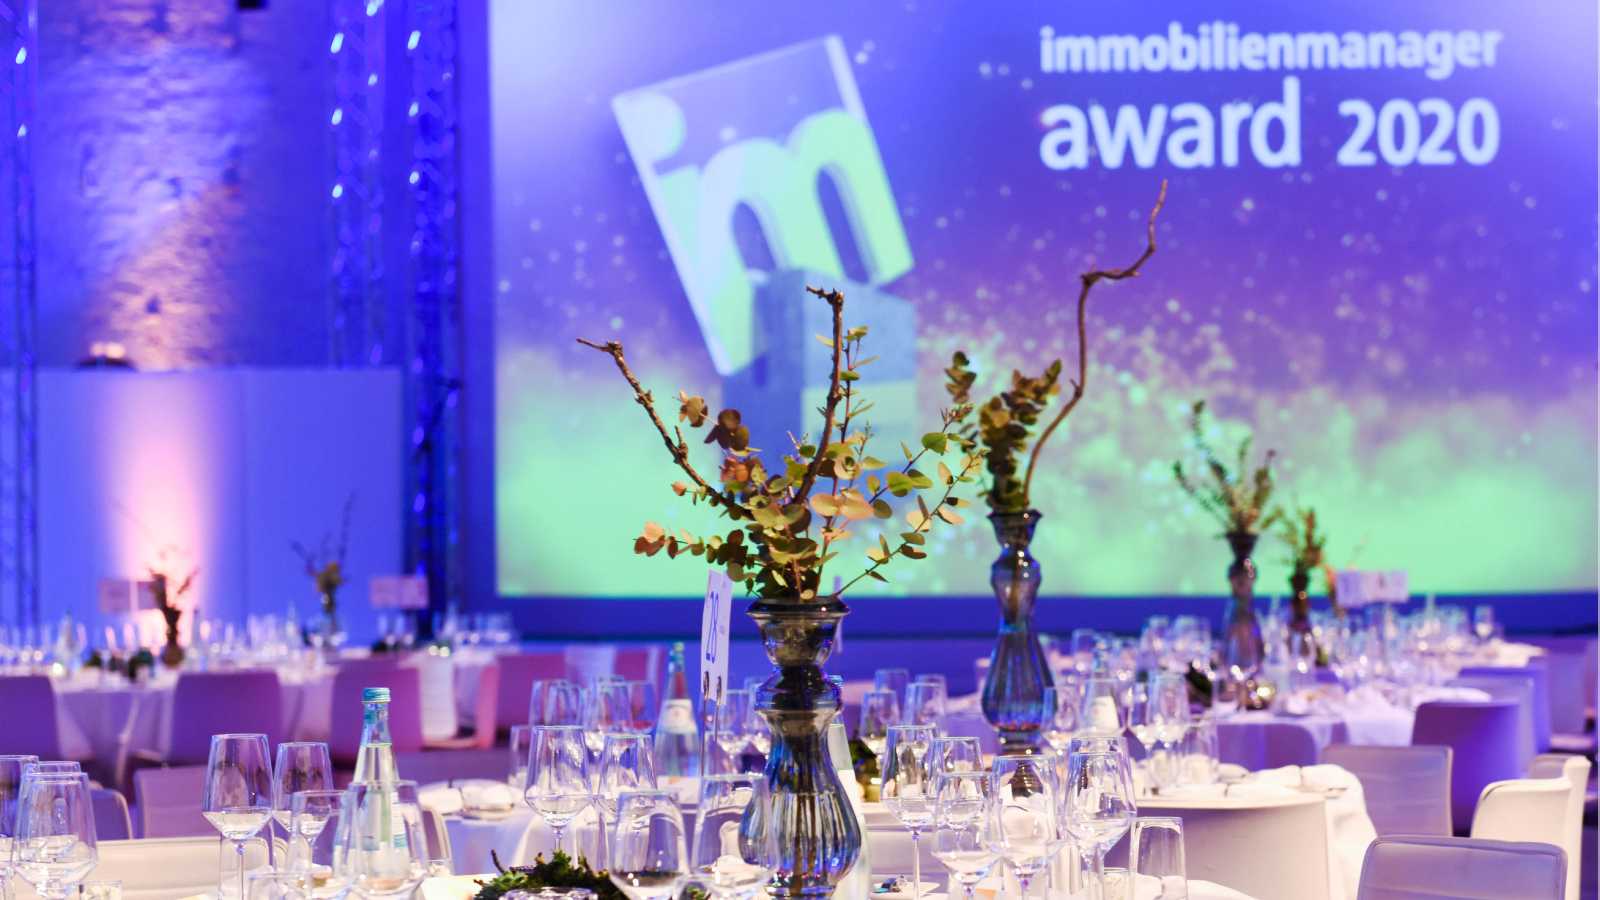 kirberg catering newsroom events immomanager award 2020 header